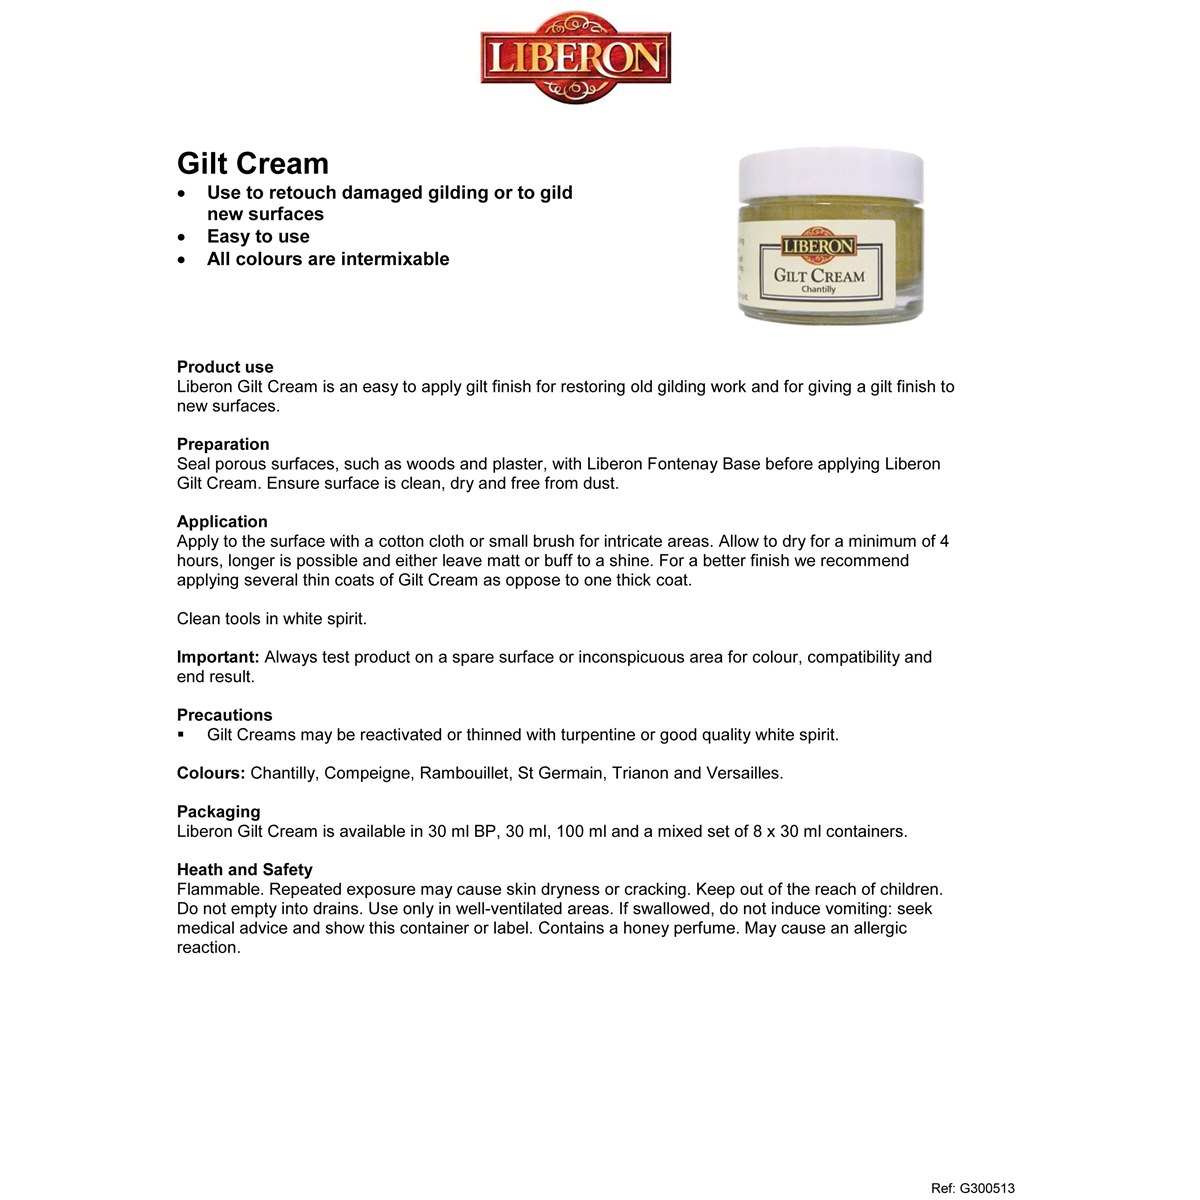 Liberon Gilt Cream Instructions